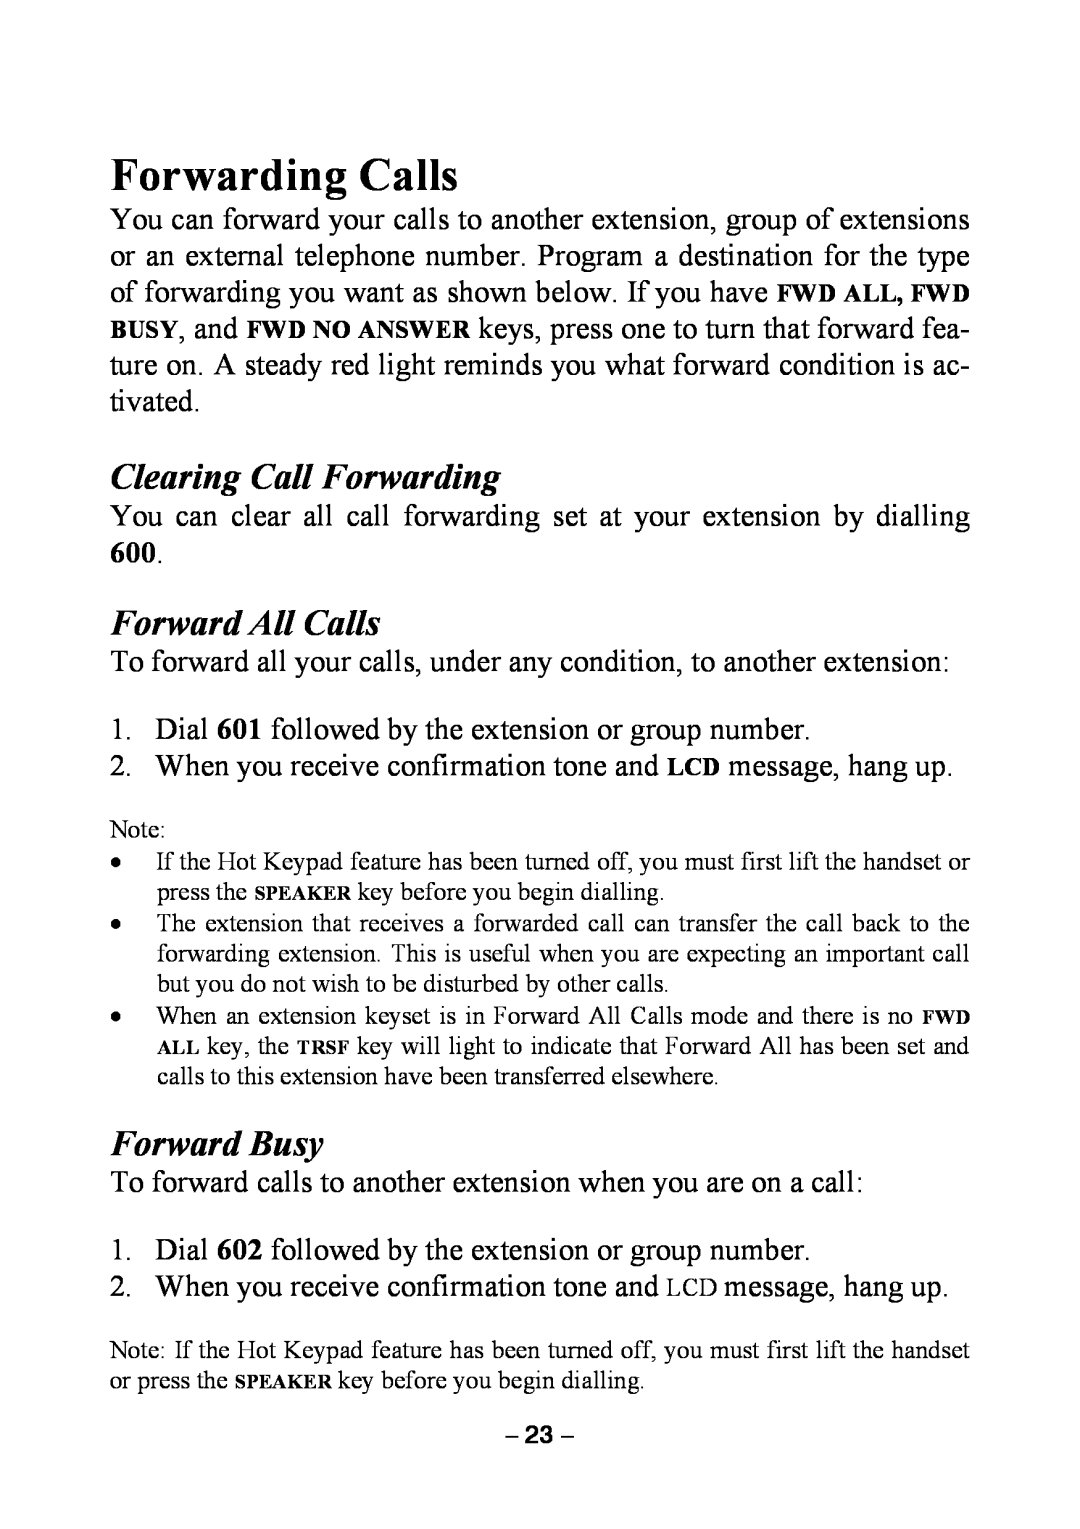 Samsung DCS KEYSET manual Forwarding Calls, Clearing Call Forwarding, Forward All Calls, Forward Busy 